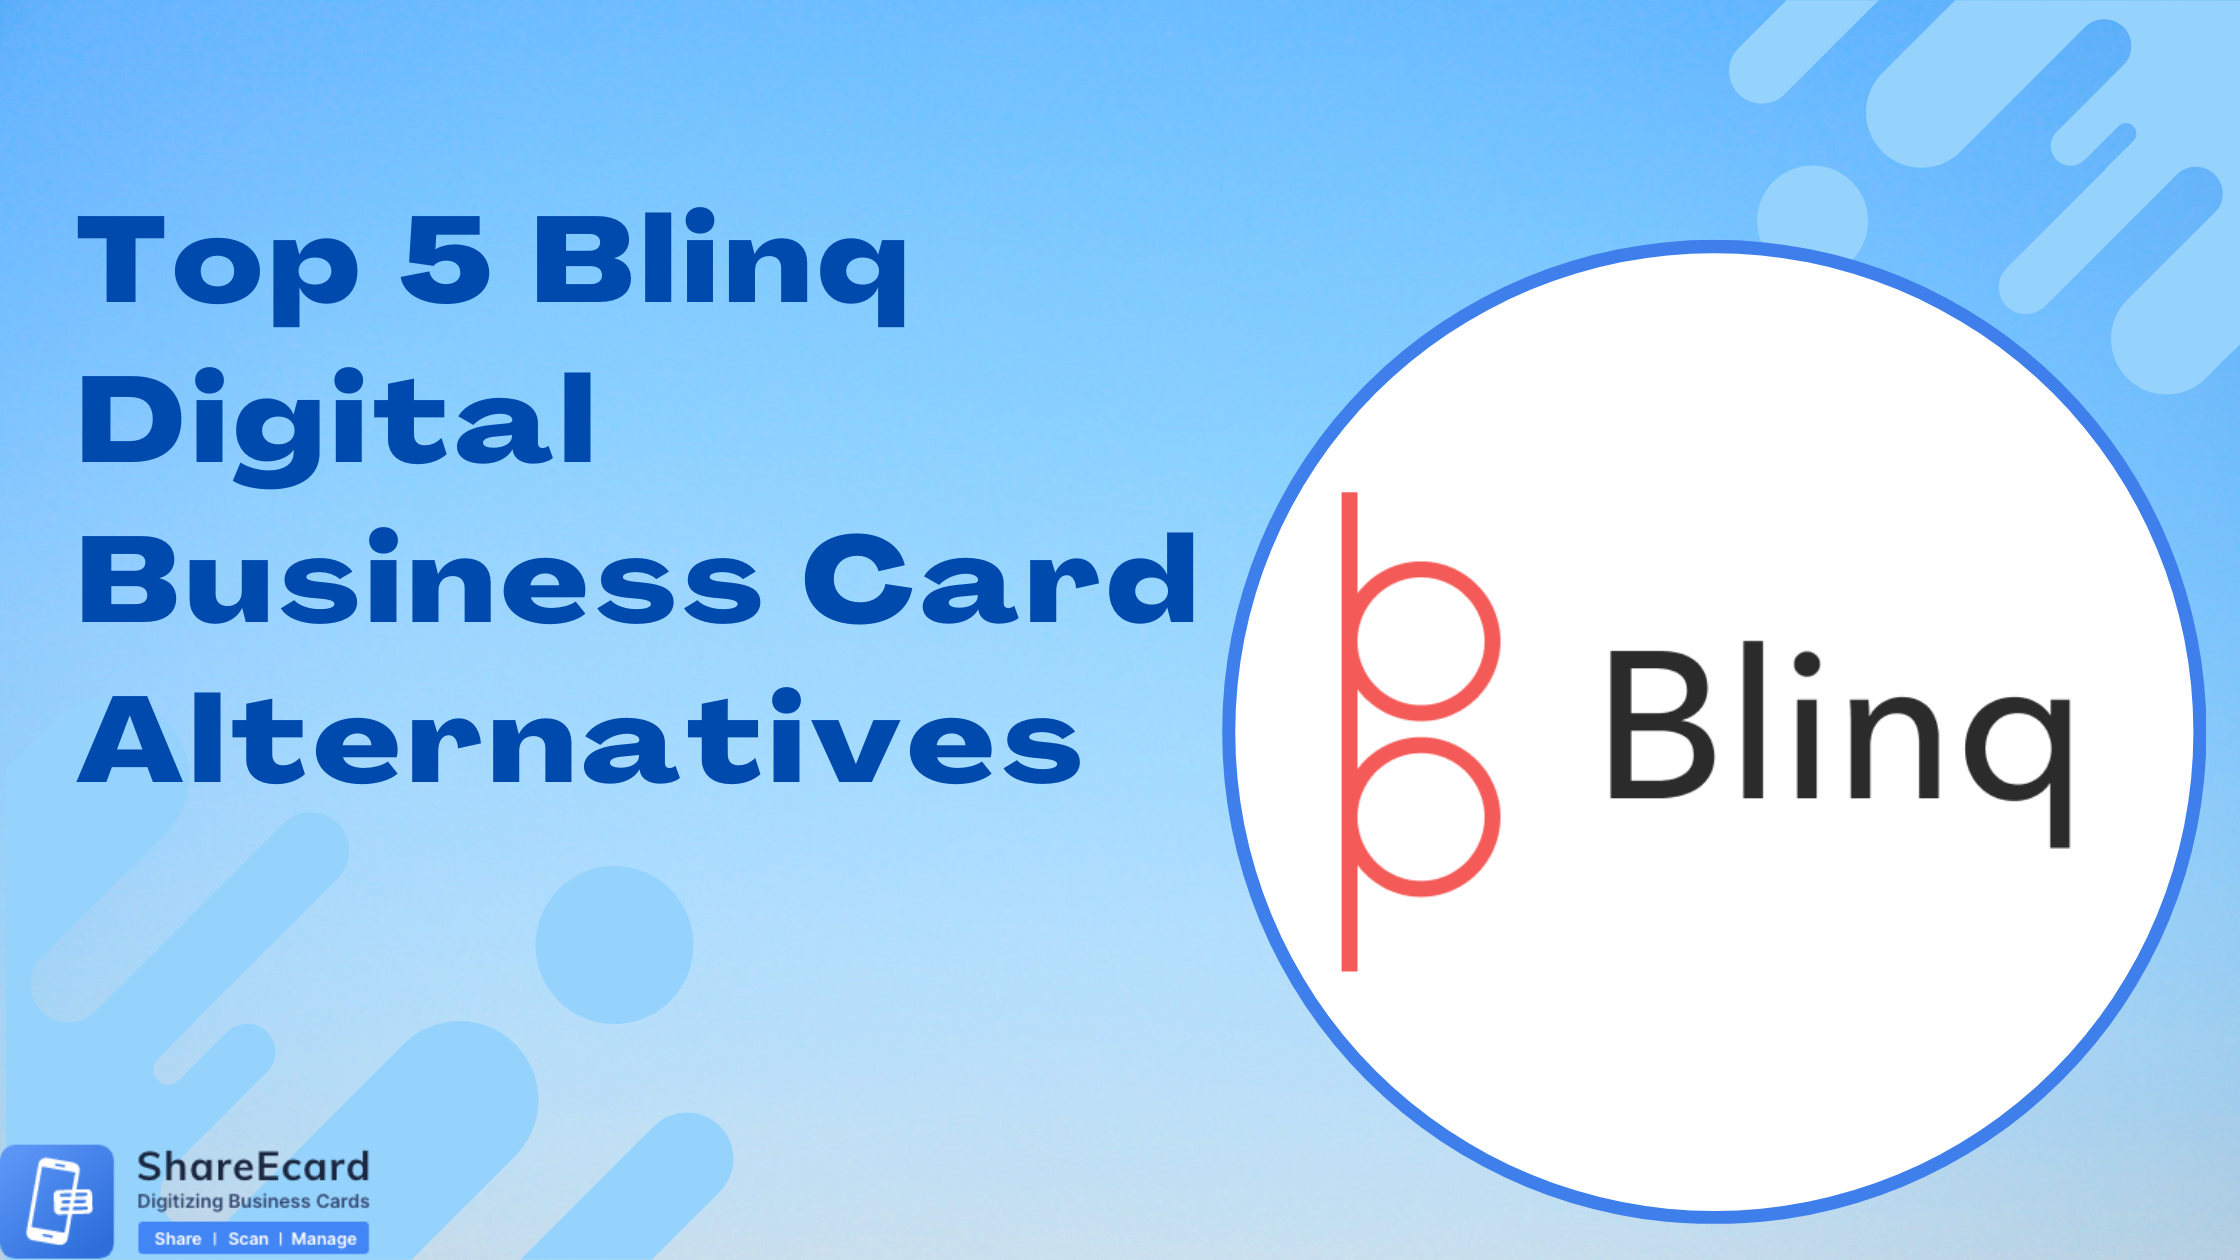 Top 5 Blinq Digital Business Card Alternatives